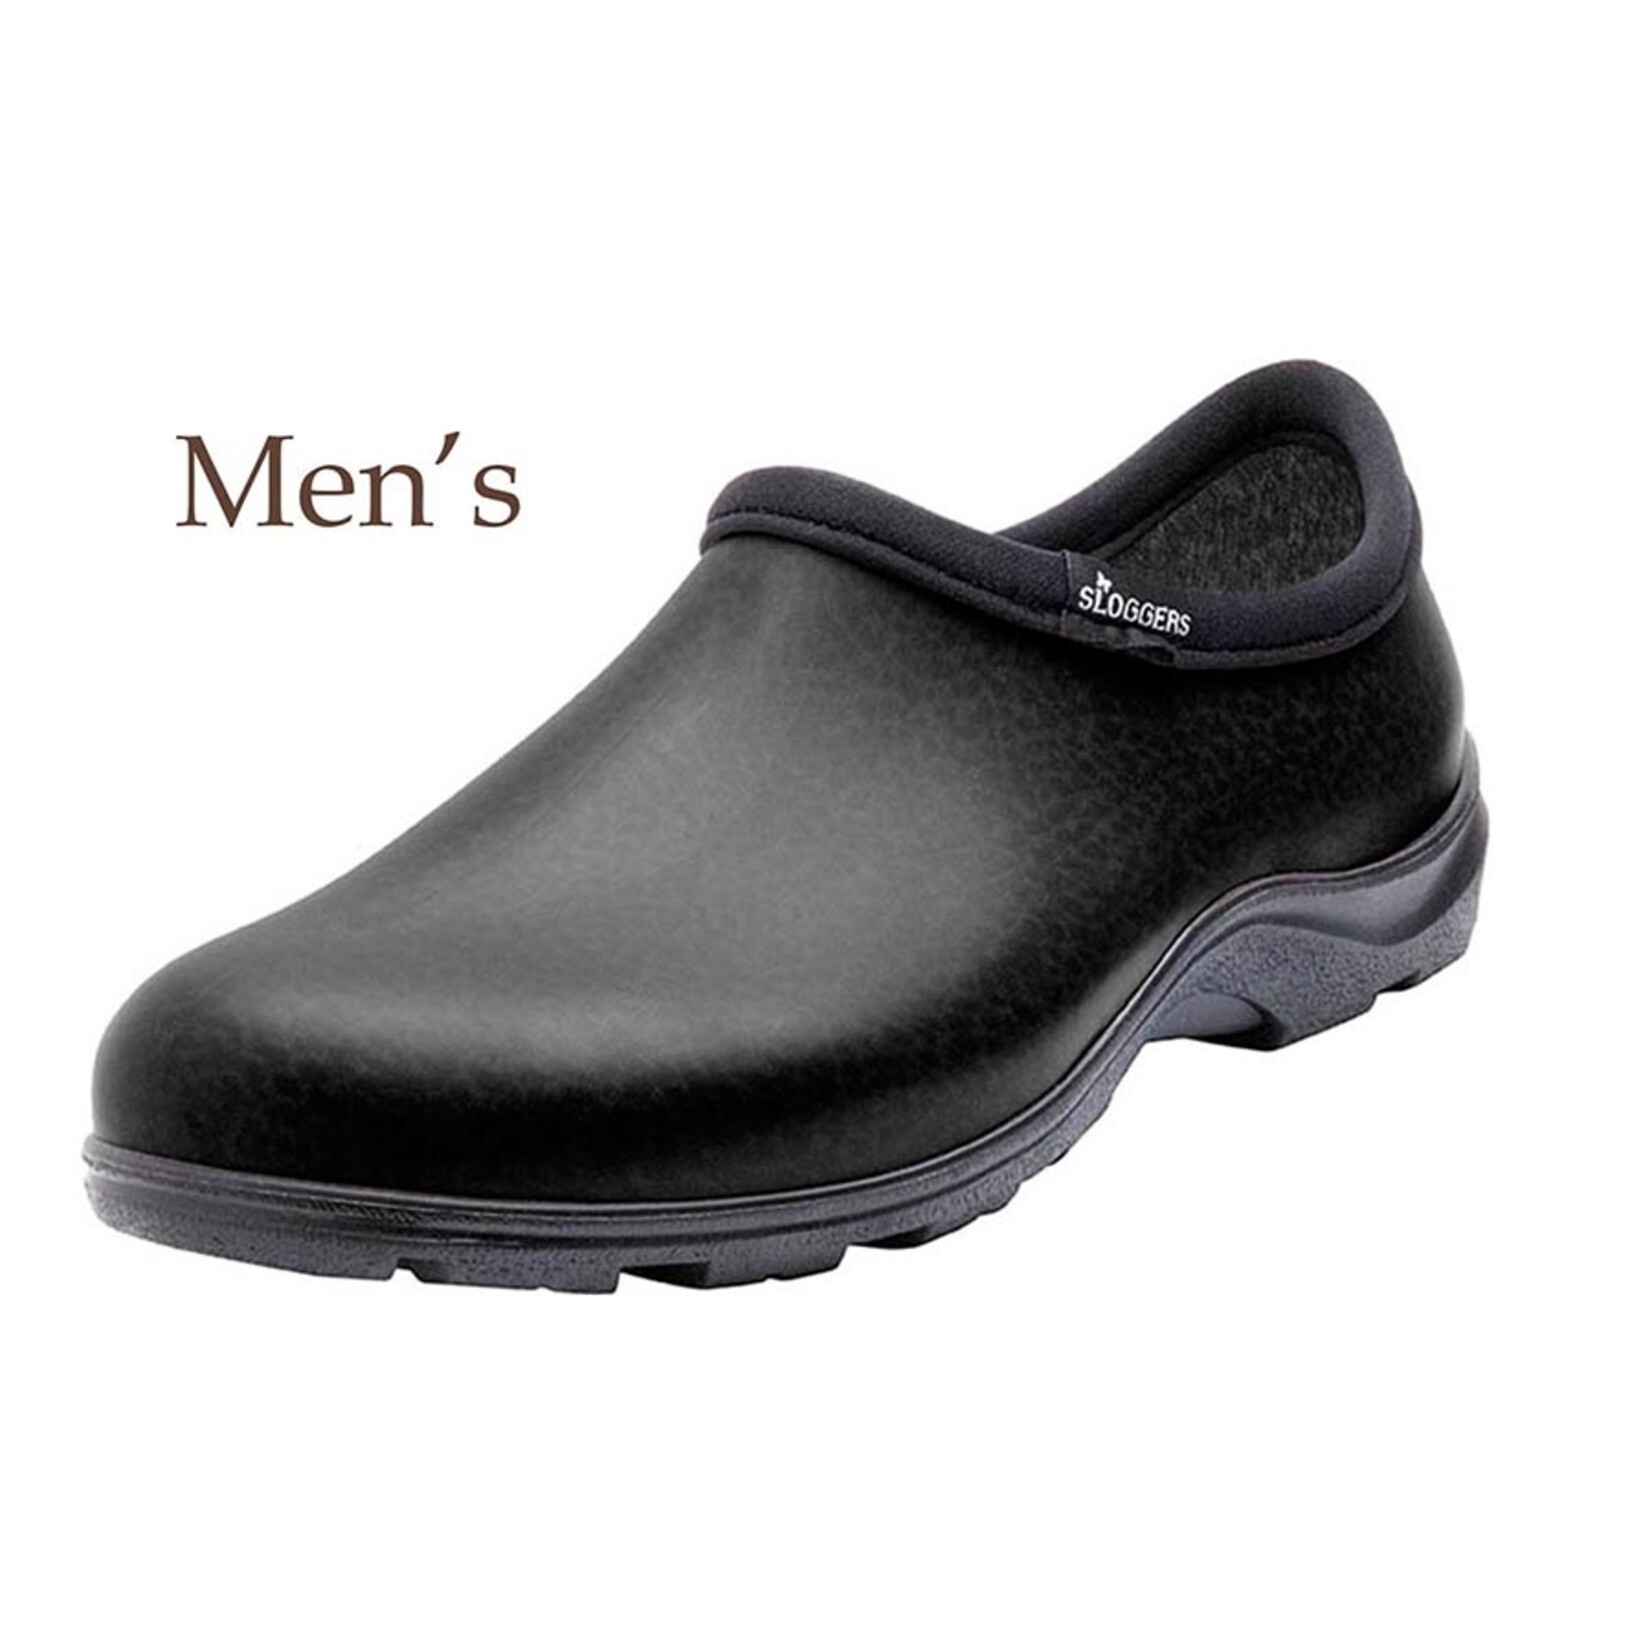 Sloggers Garden Shoe Men's Black Size 10